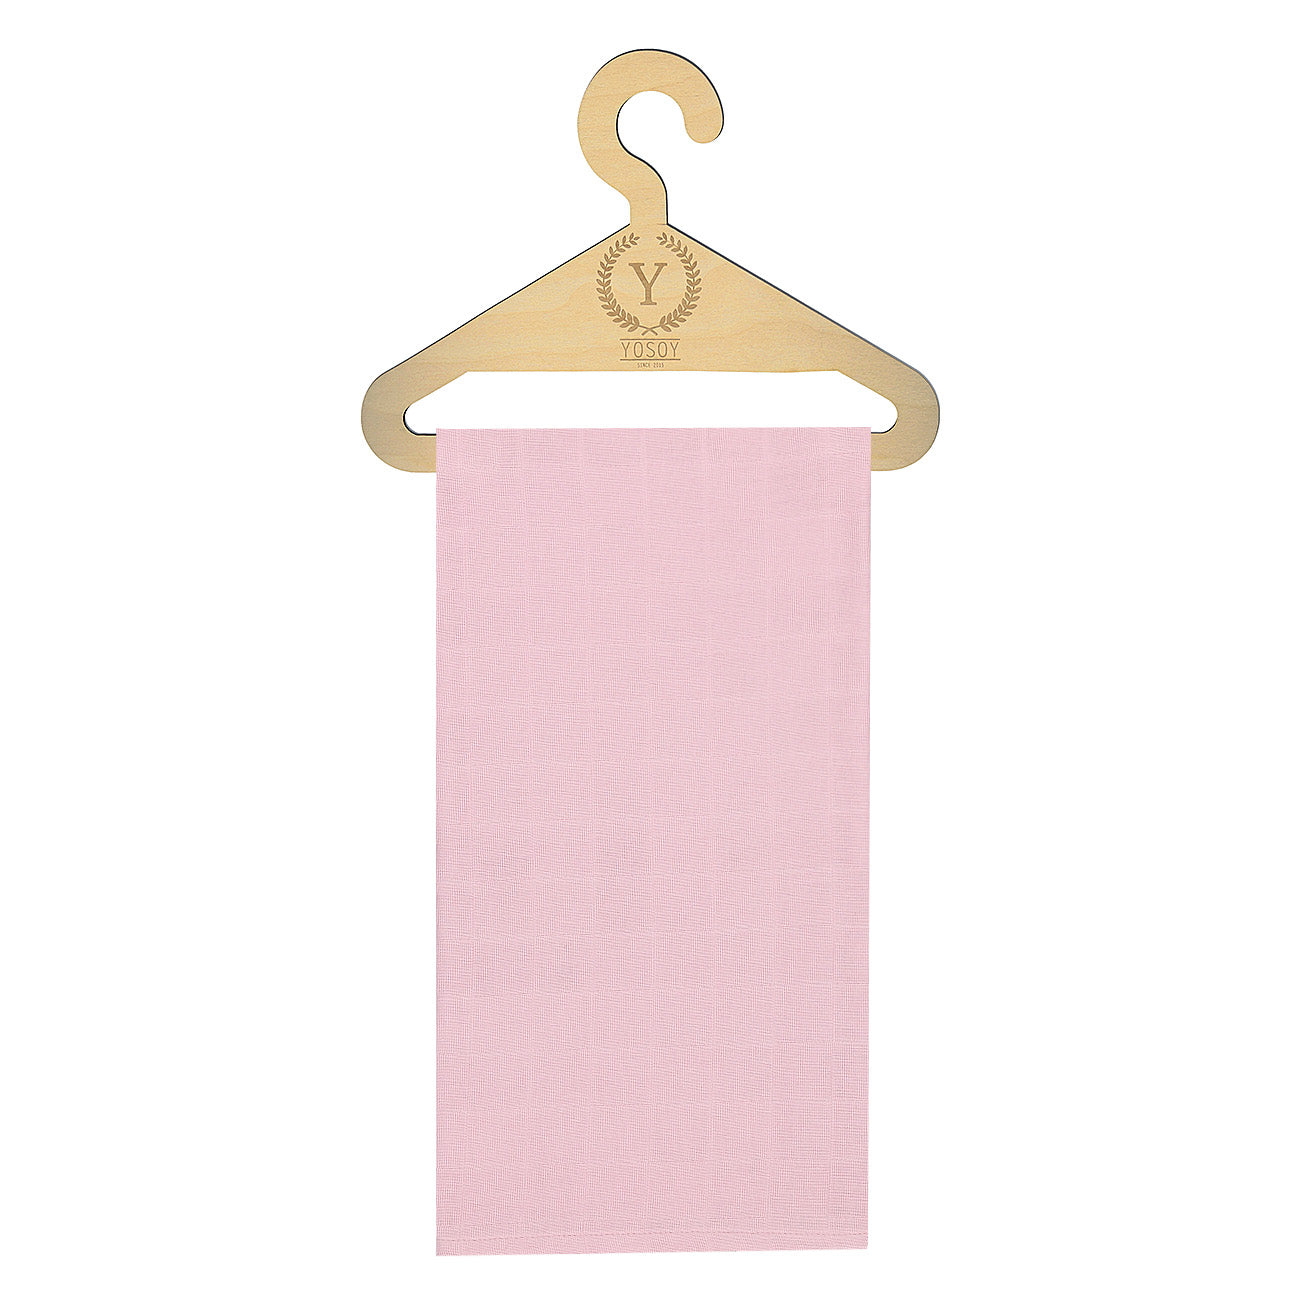 Powder Pink Muslin Swaddle Blanket